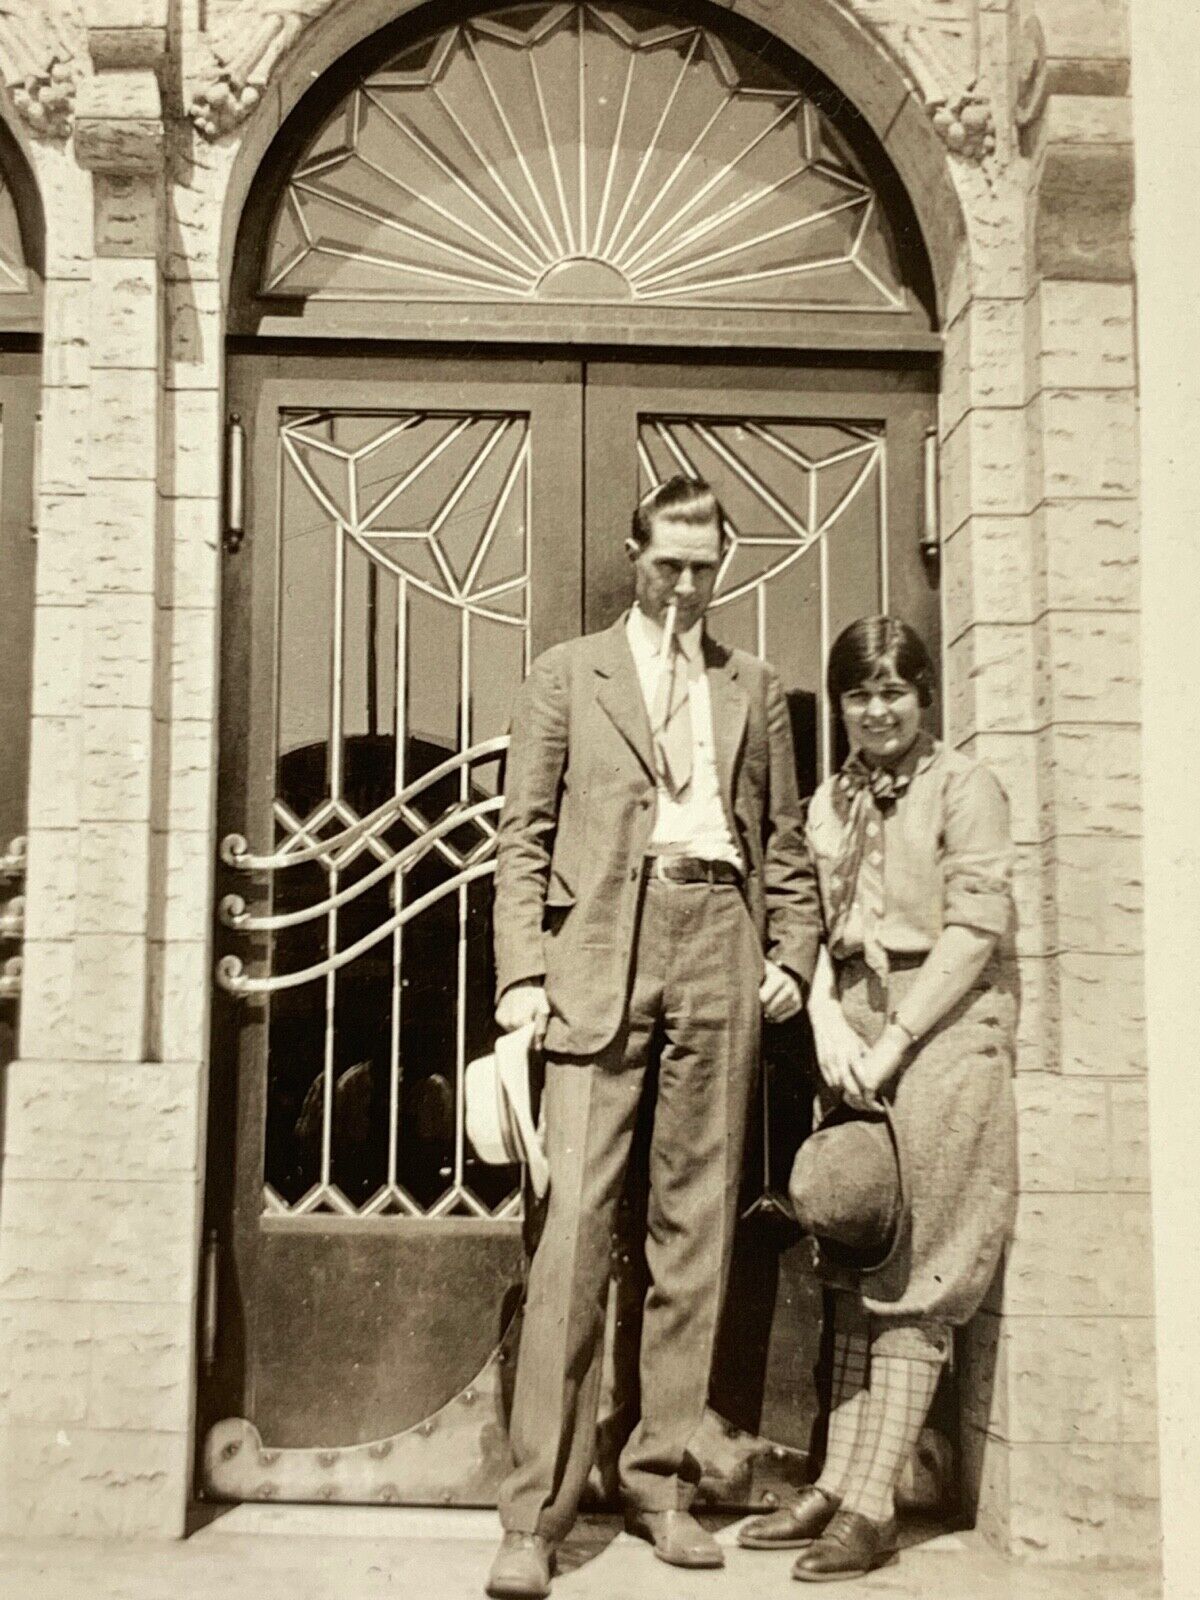 (AaE) FOUND PHOTO Photograph Snapshot Art Deco Architecture Door Glass Couple 